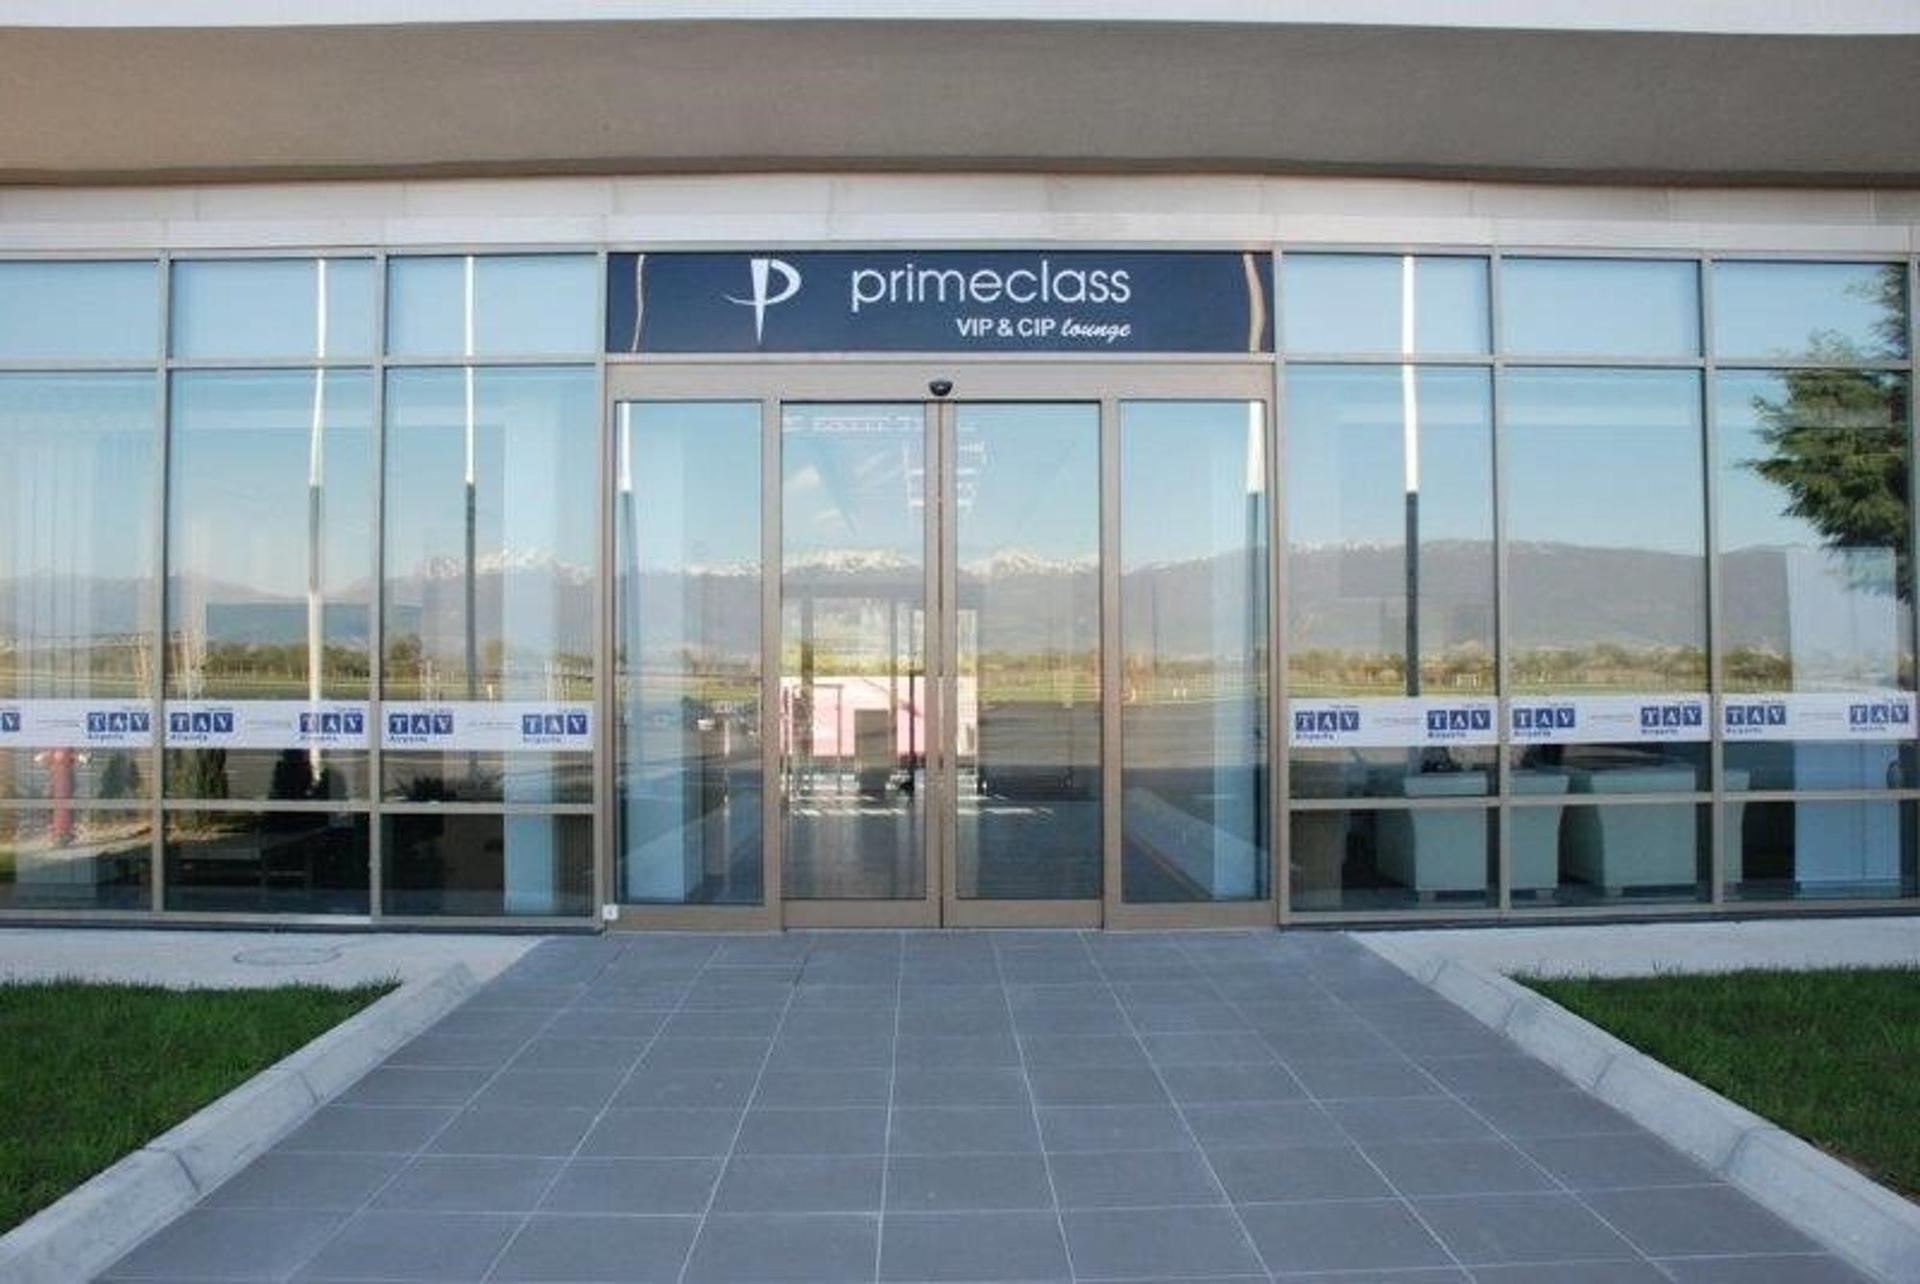 Primeclass CIP Lounge image 3 of 3